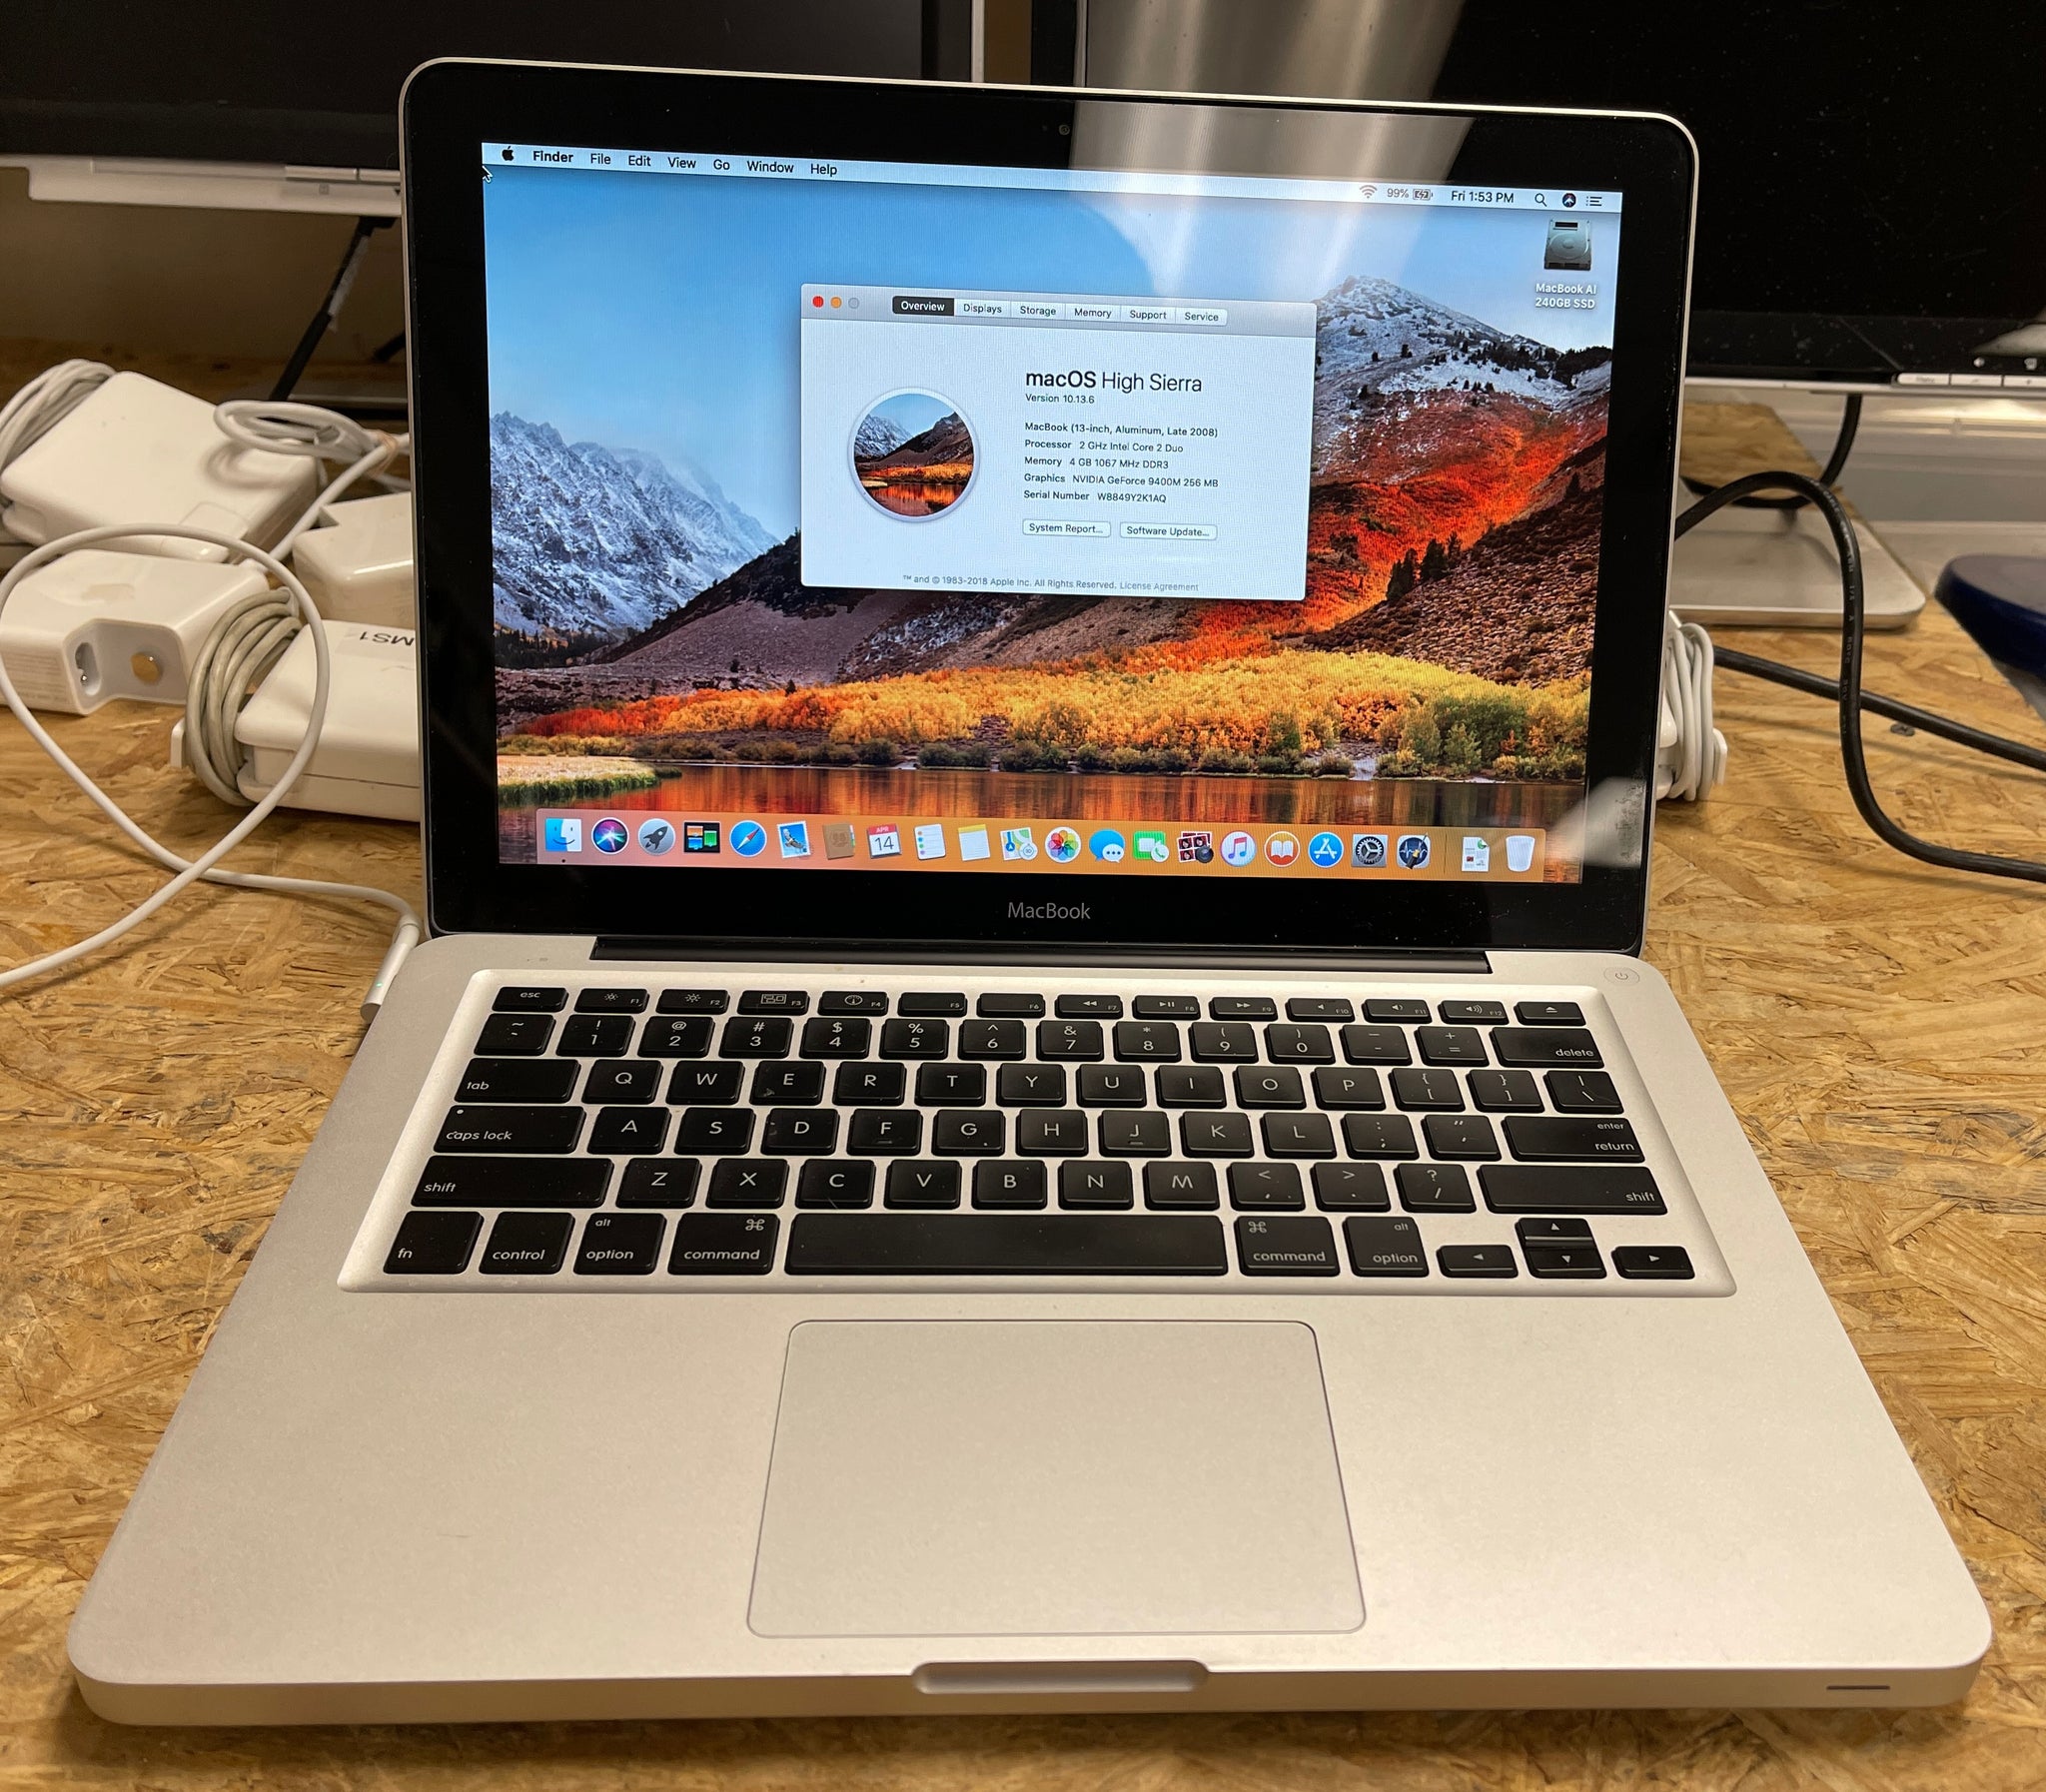 Apple MacBook 13-inch Aluminum Late 2008 2GHz Intel Core 2 Duo